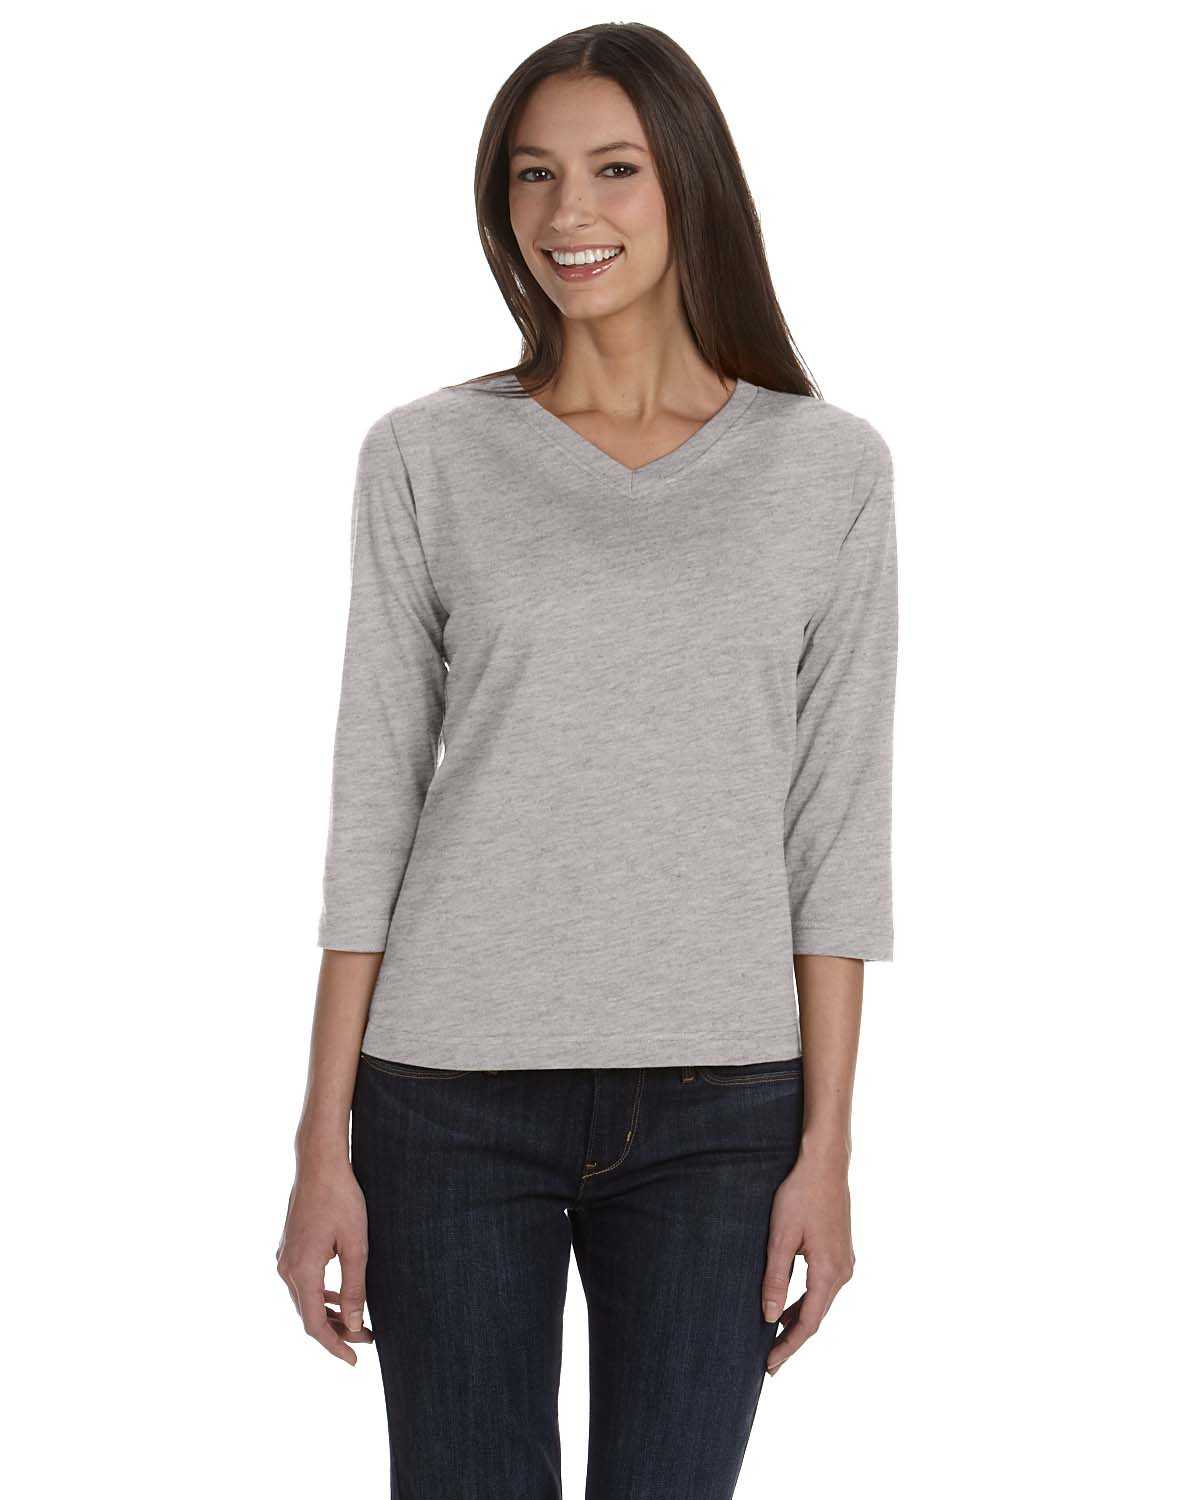 LAT 3577 Ladies' 3/4 Sleeve Premium Jersey T-Shirt | ApparelChoice.com